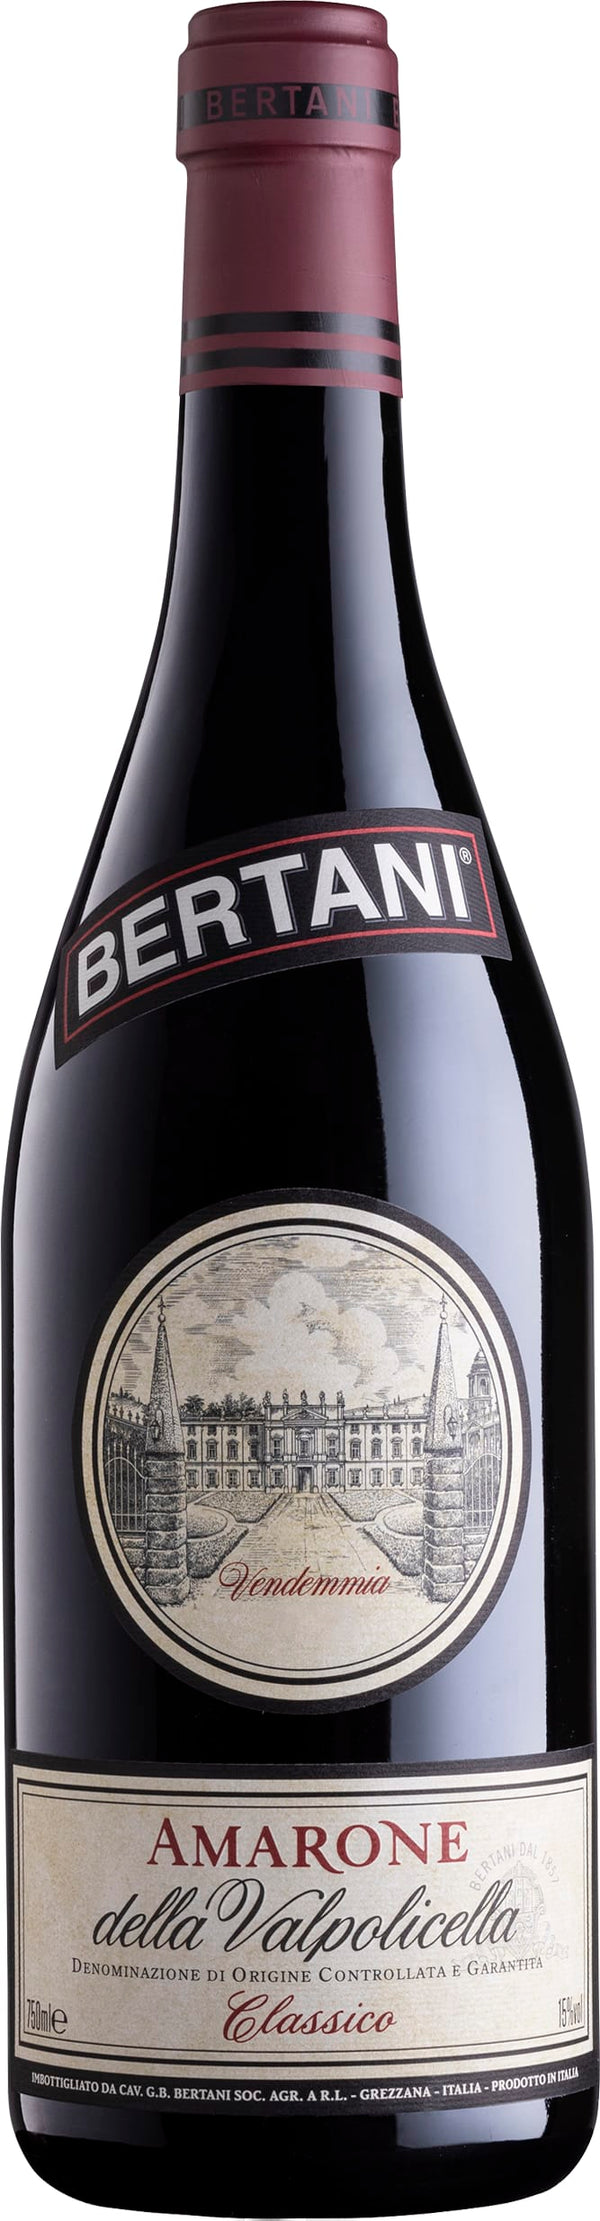 Amarone Cl Doc 04 Bertani 6x75cl - Just Wines 